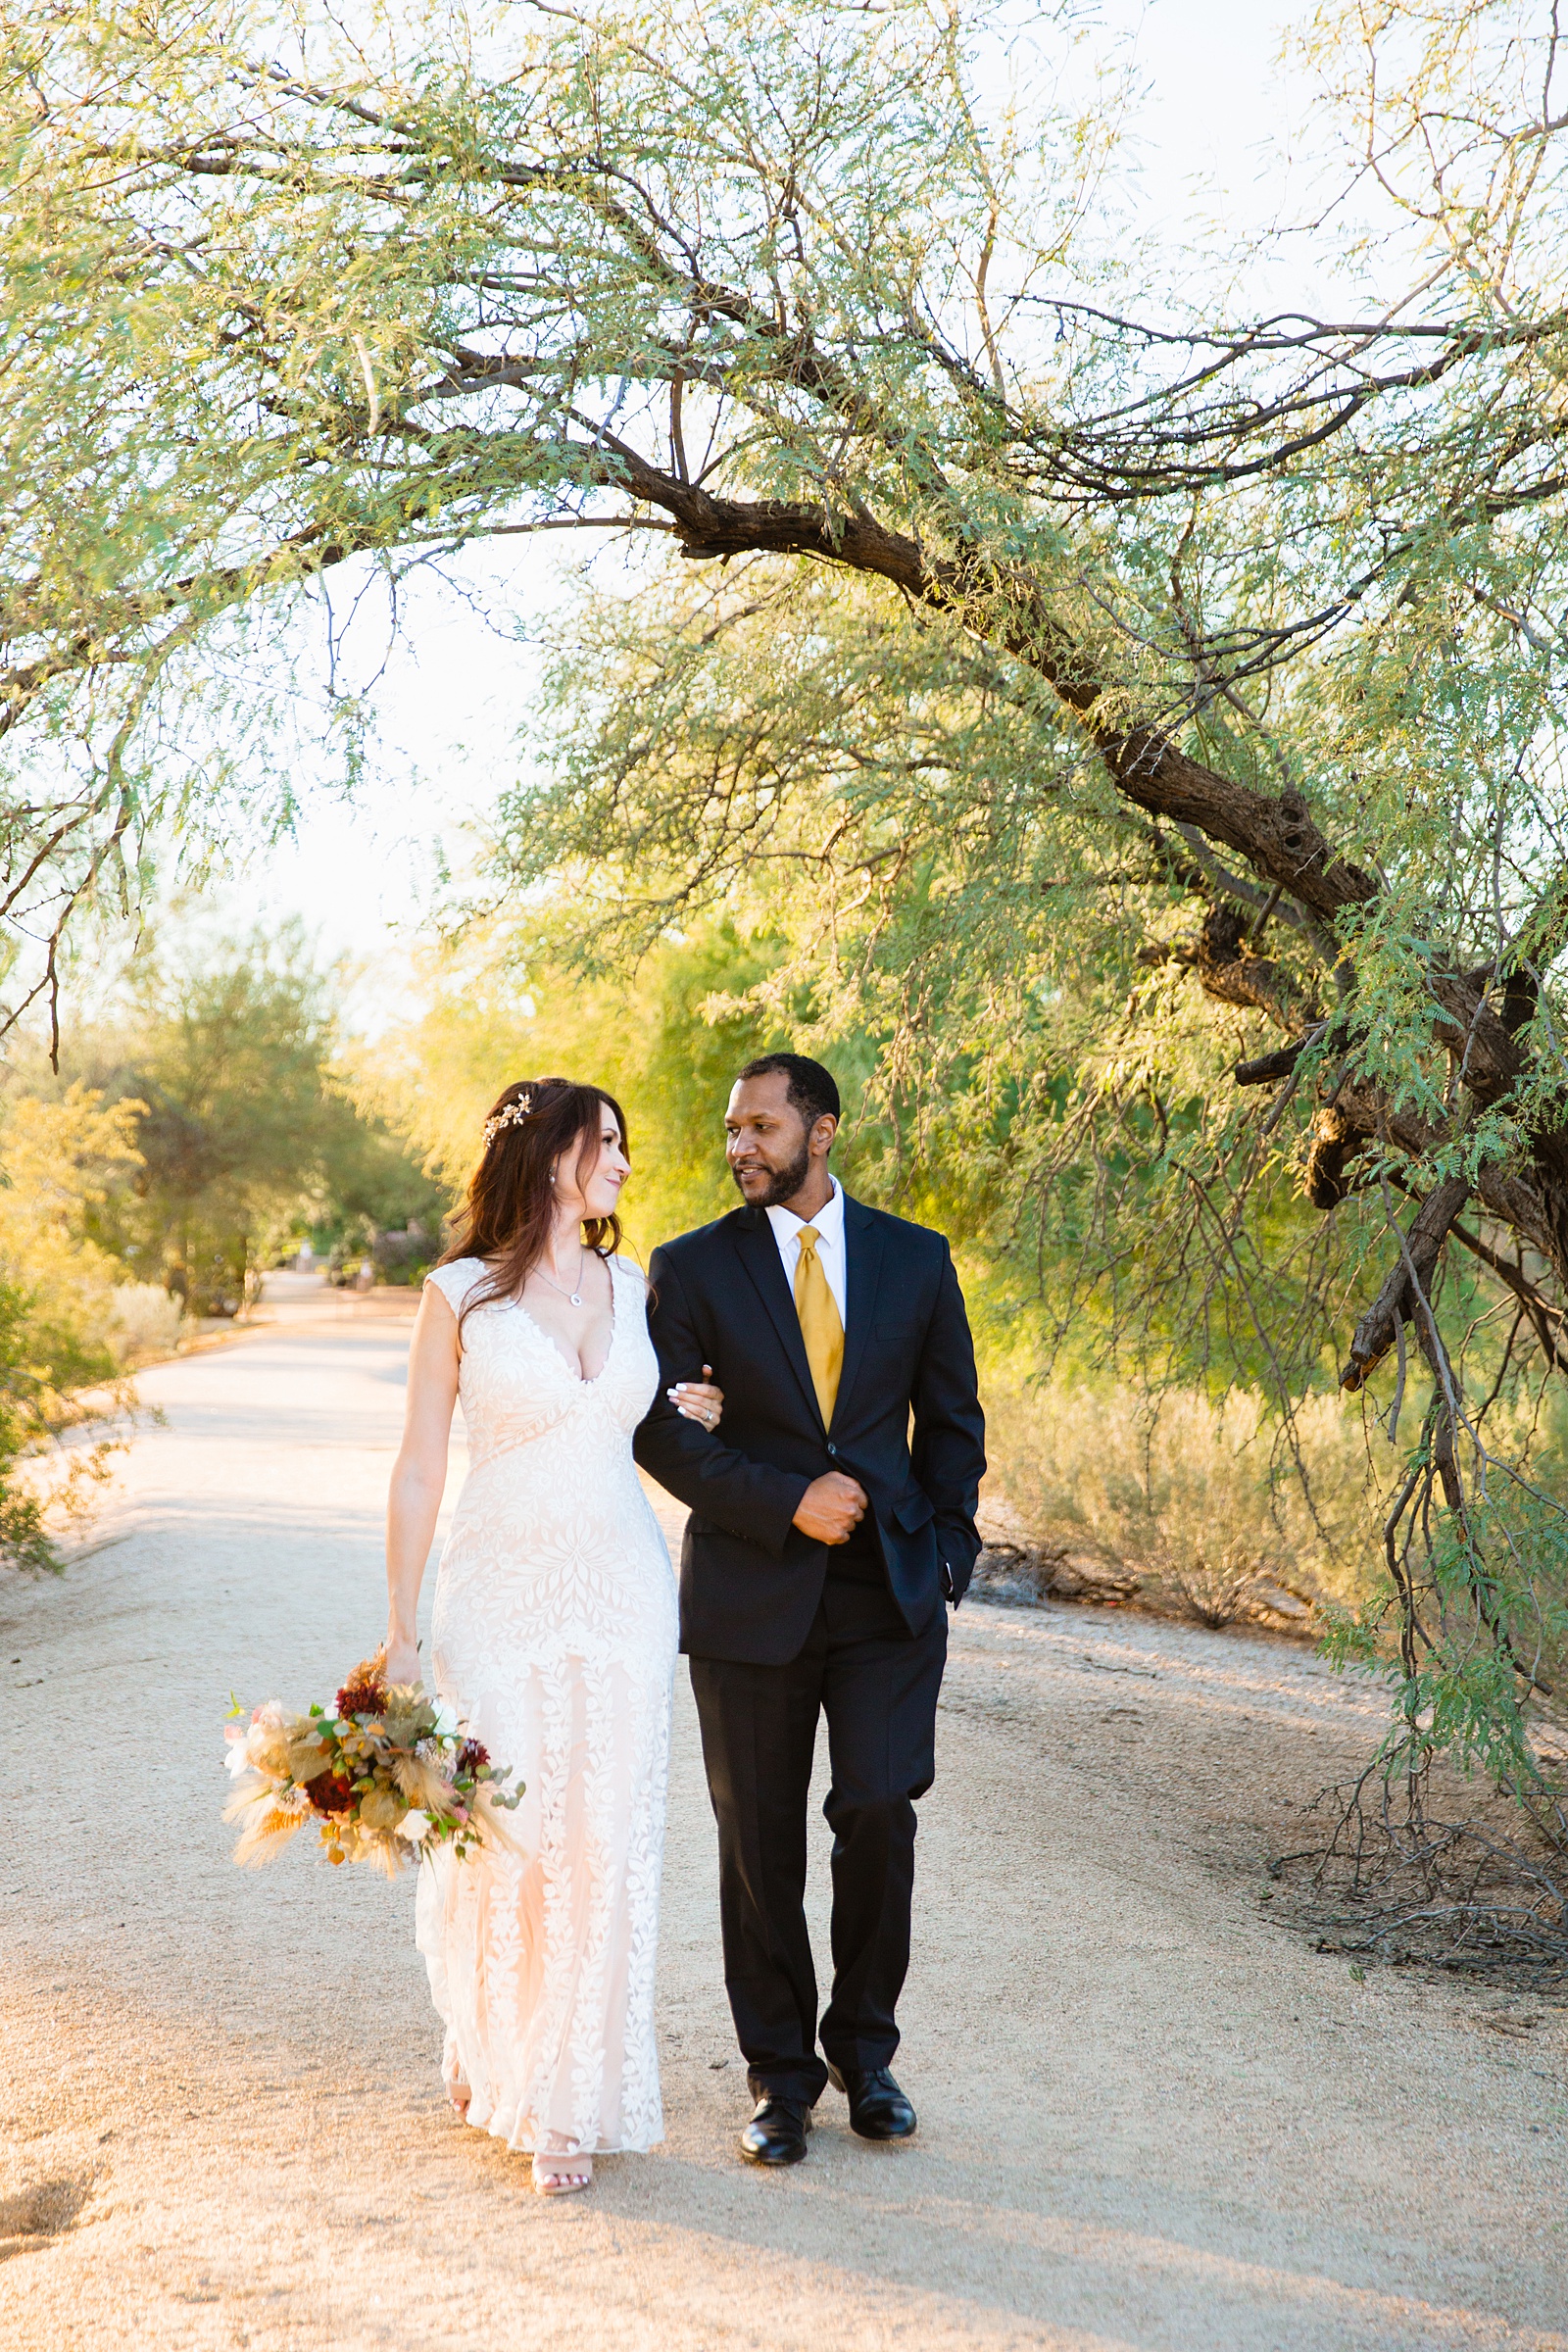 Bride and groom walking together during their Backyard Micro wedding by Arizona wedding photographer PMA Photography.